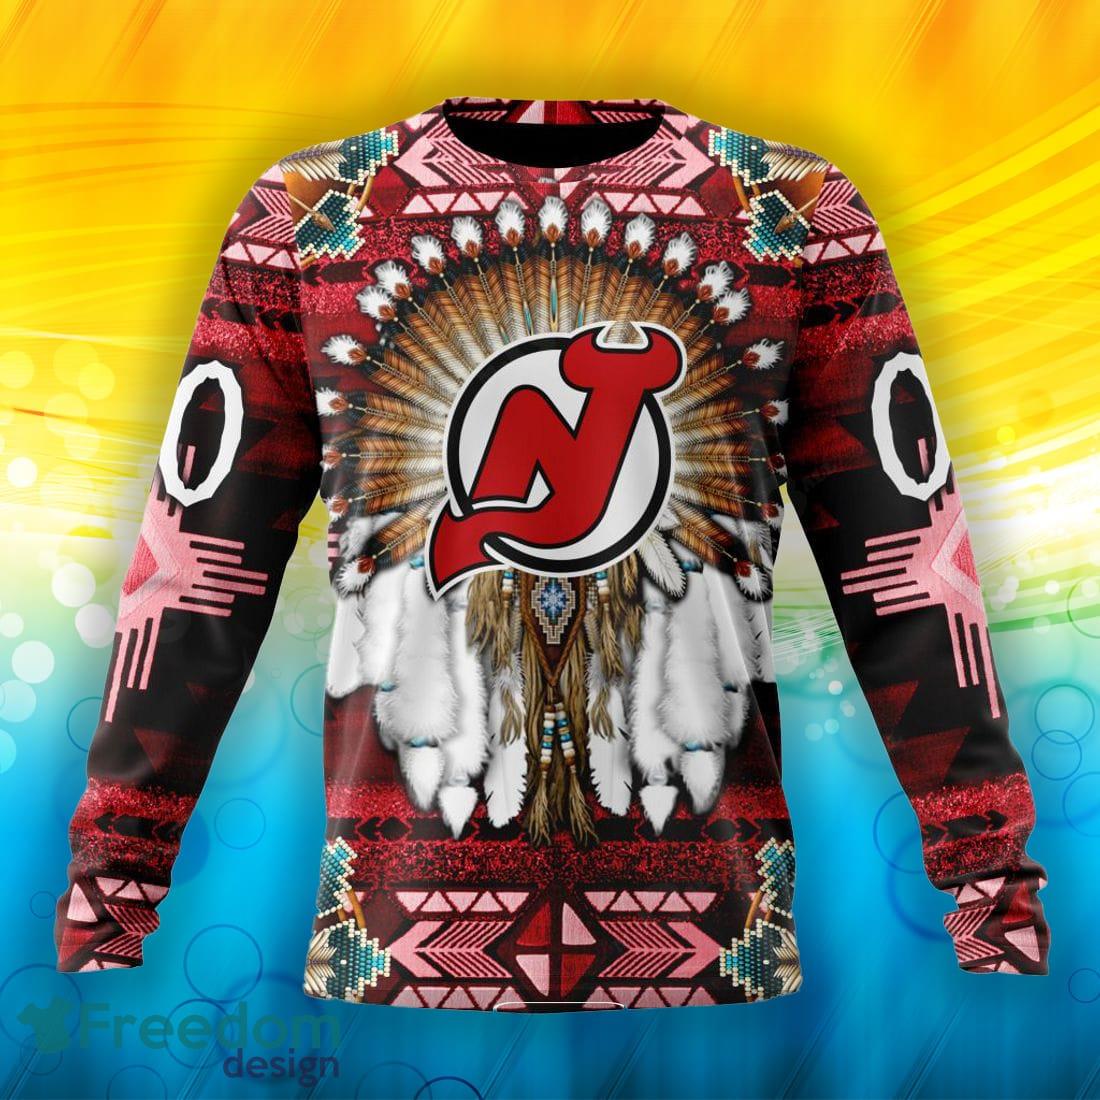 NHL New Jersey Devils Custom Name Number 2023 Mix Jersey Sweatshirt